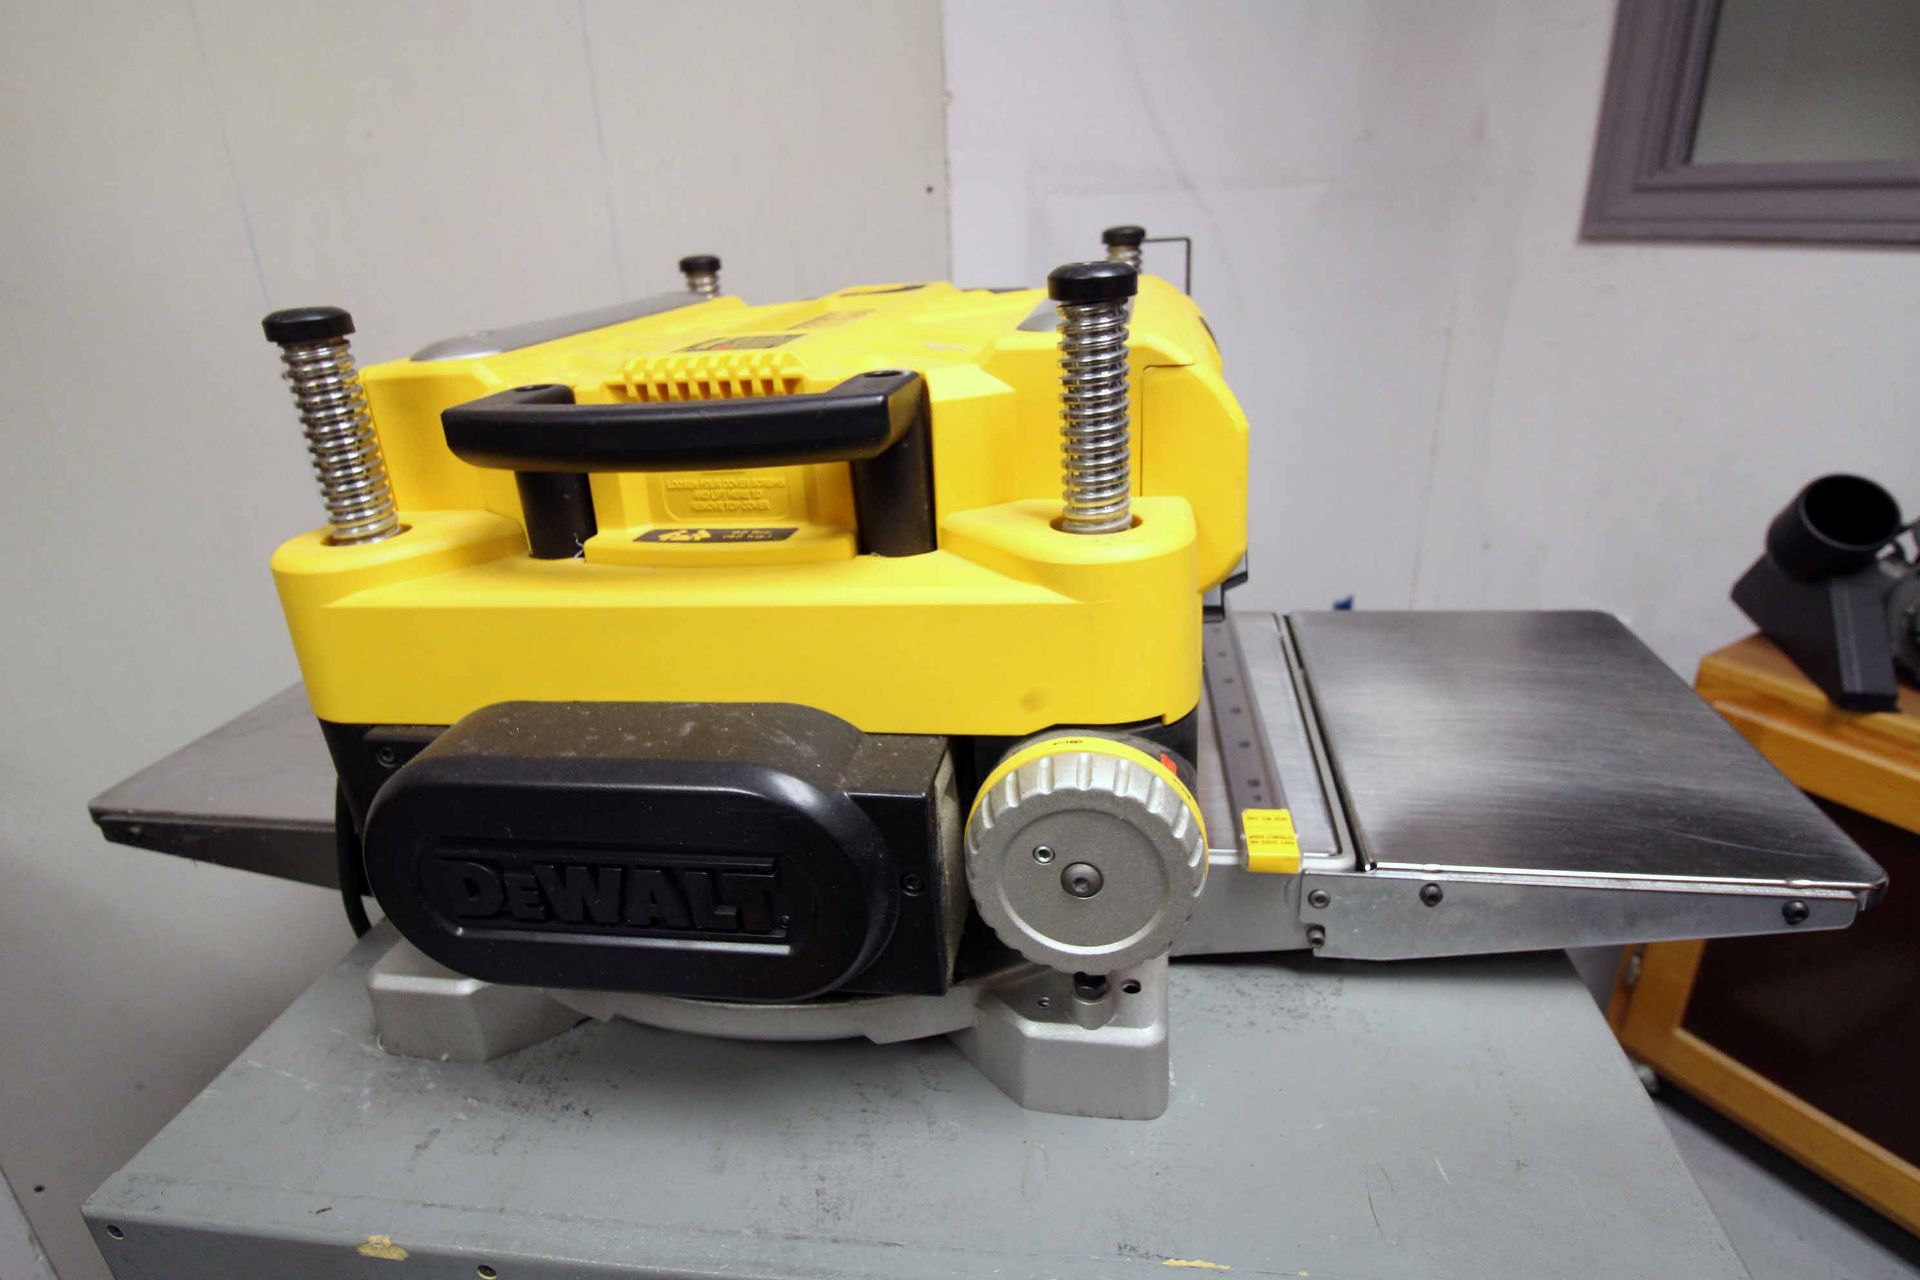 PLANER, DEWALT 13" MDL. DW735, 15 amp, 13", 20,000 max. RPM, 3-knife cutter head, 2-spd. gear box, - Image 6 of 6